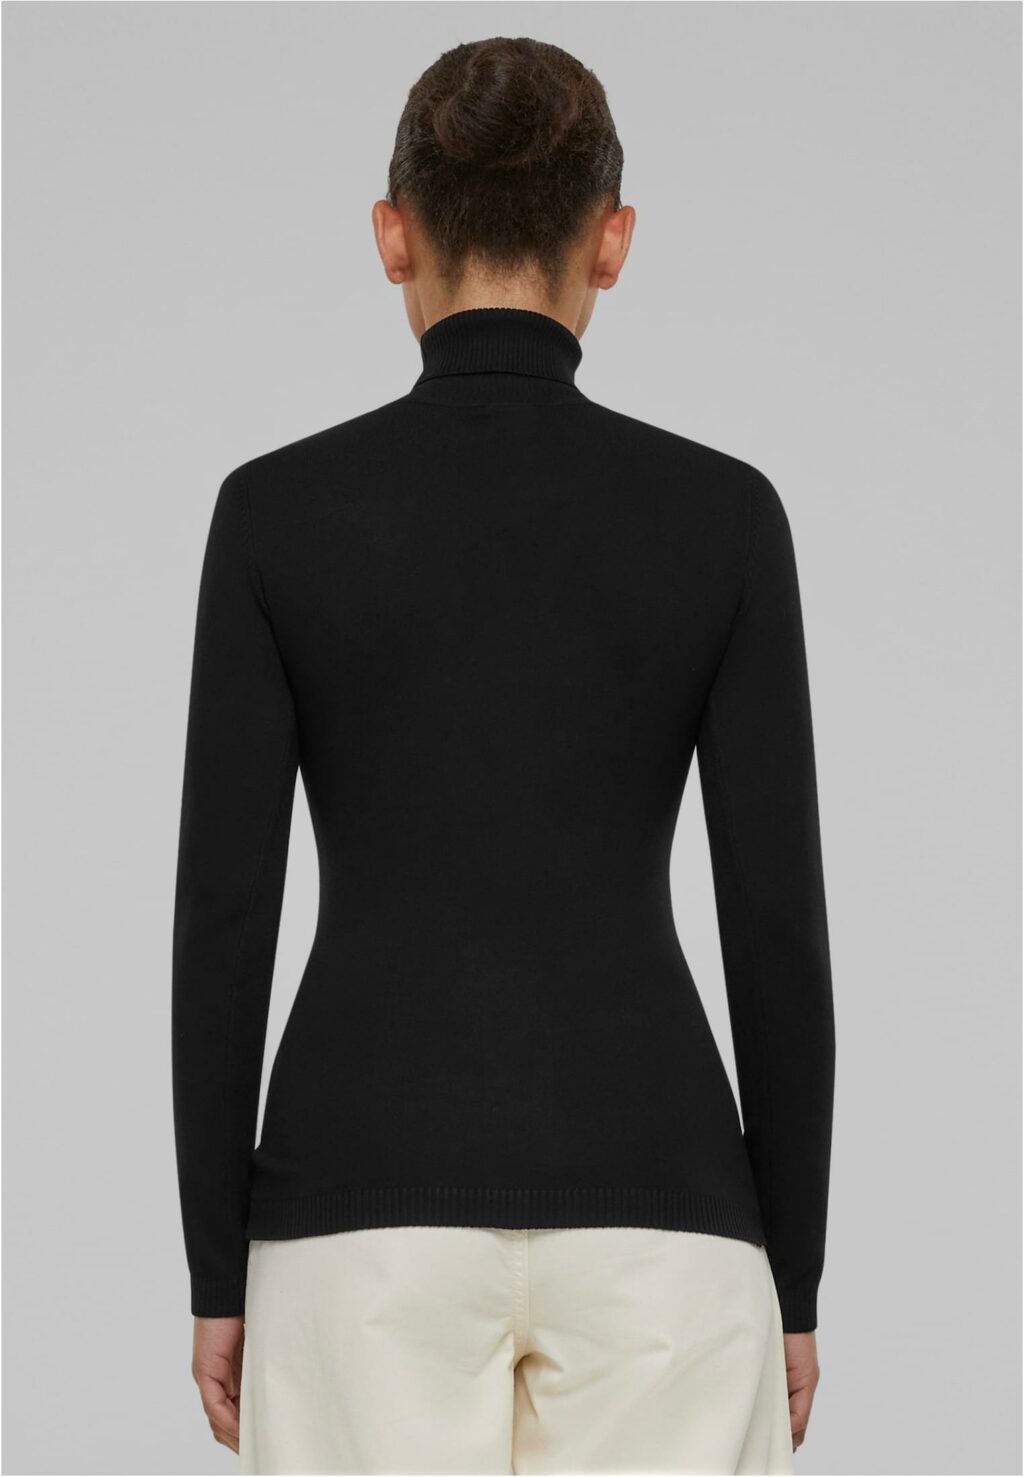 Urban Classics Ladies Knitted Turtleneck Sweater black TB6115